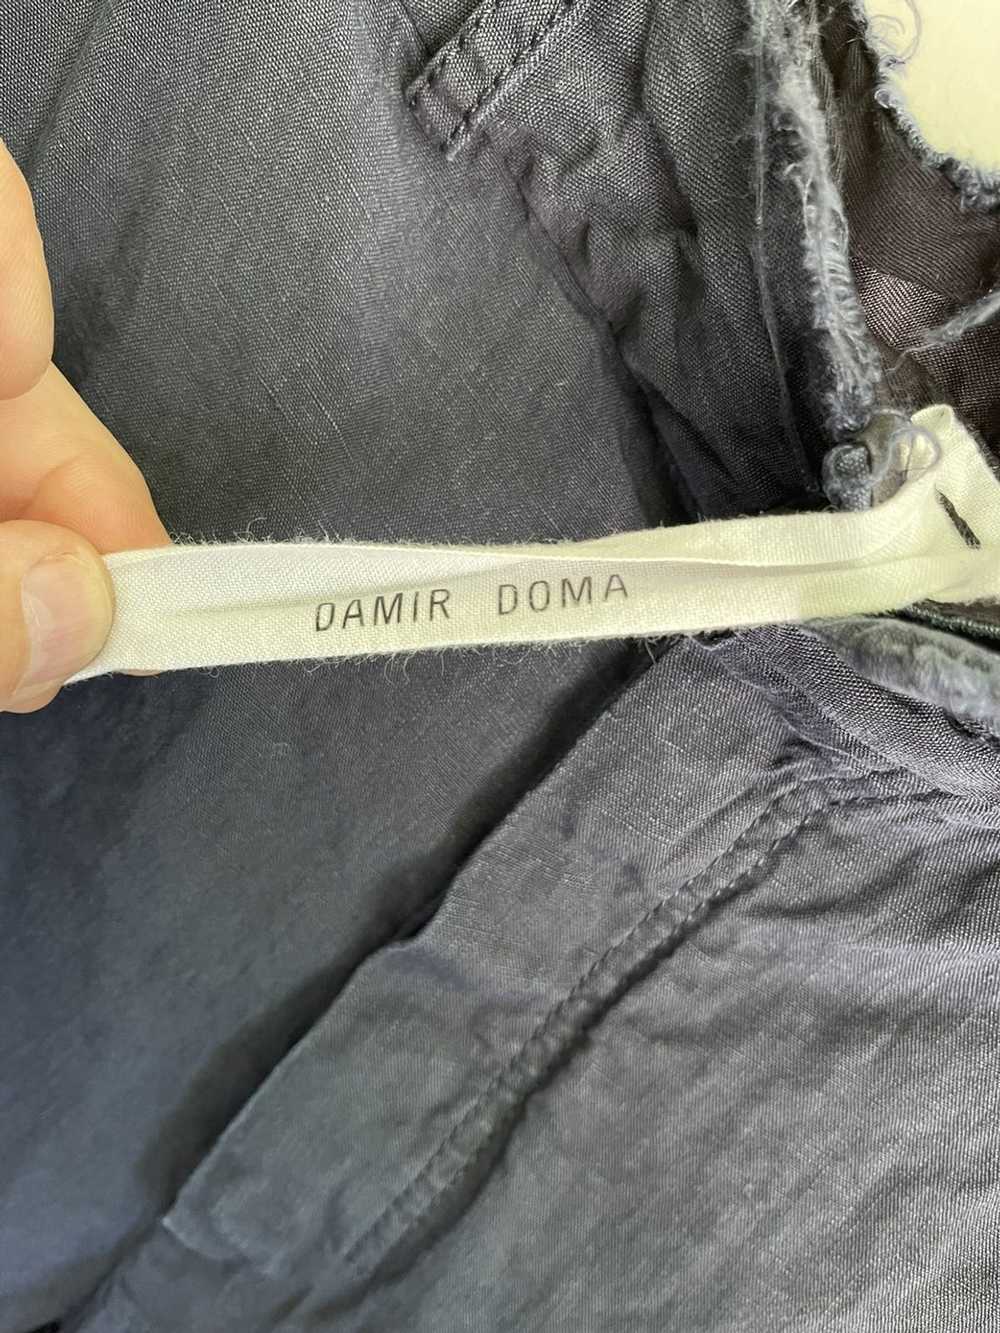 Damir Doma Damir Doma navy linen pants. Size 32 - image 8